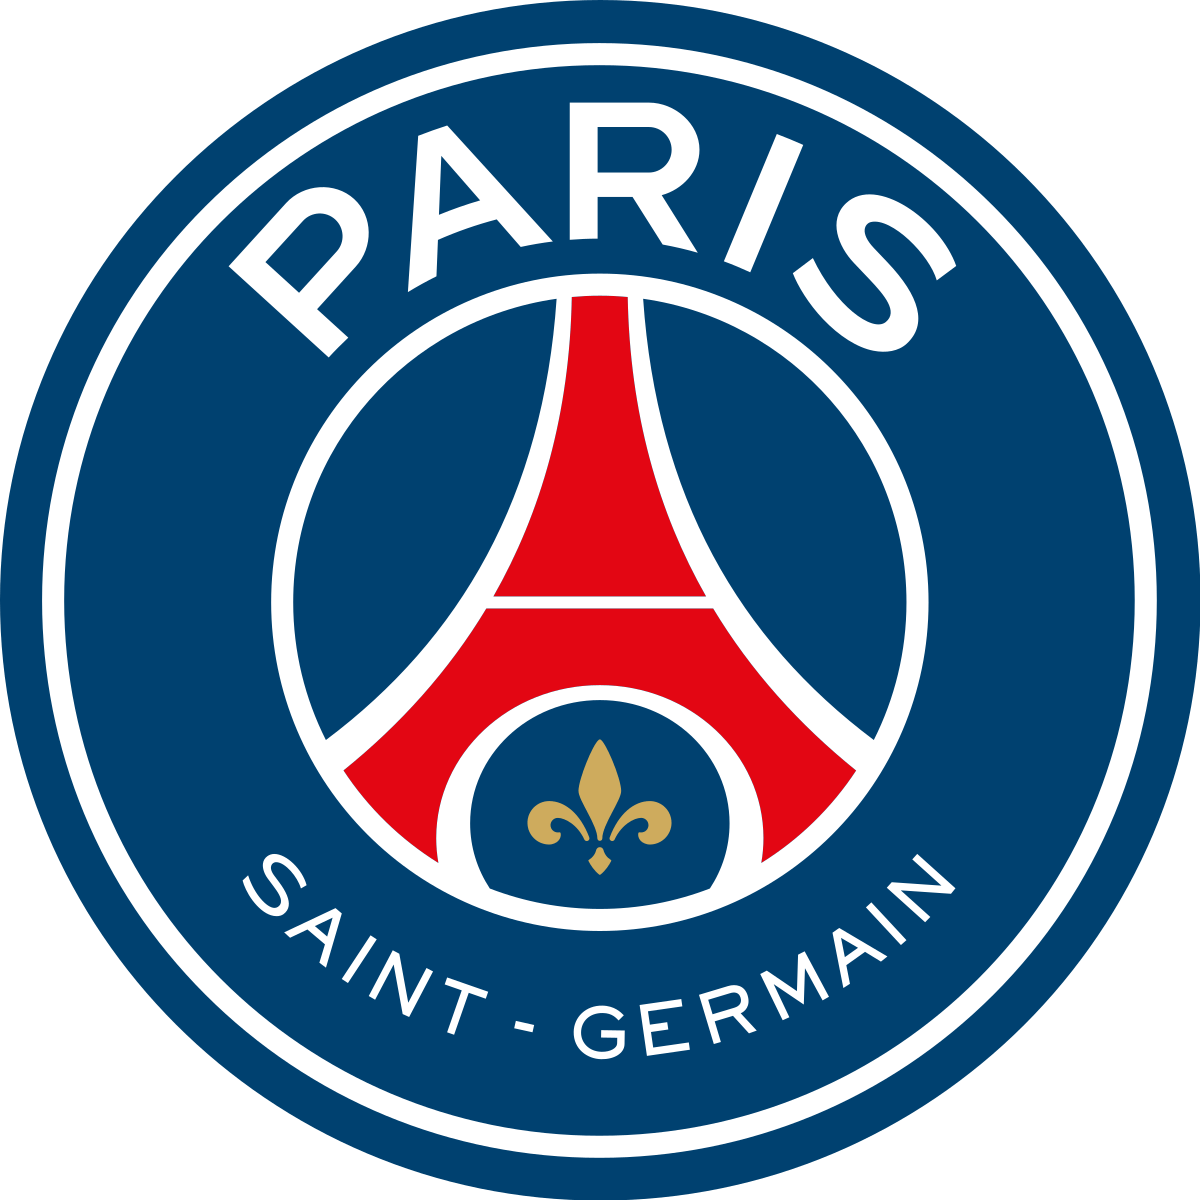 Paris Team Logo - Paris Saint-Germain F.C.